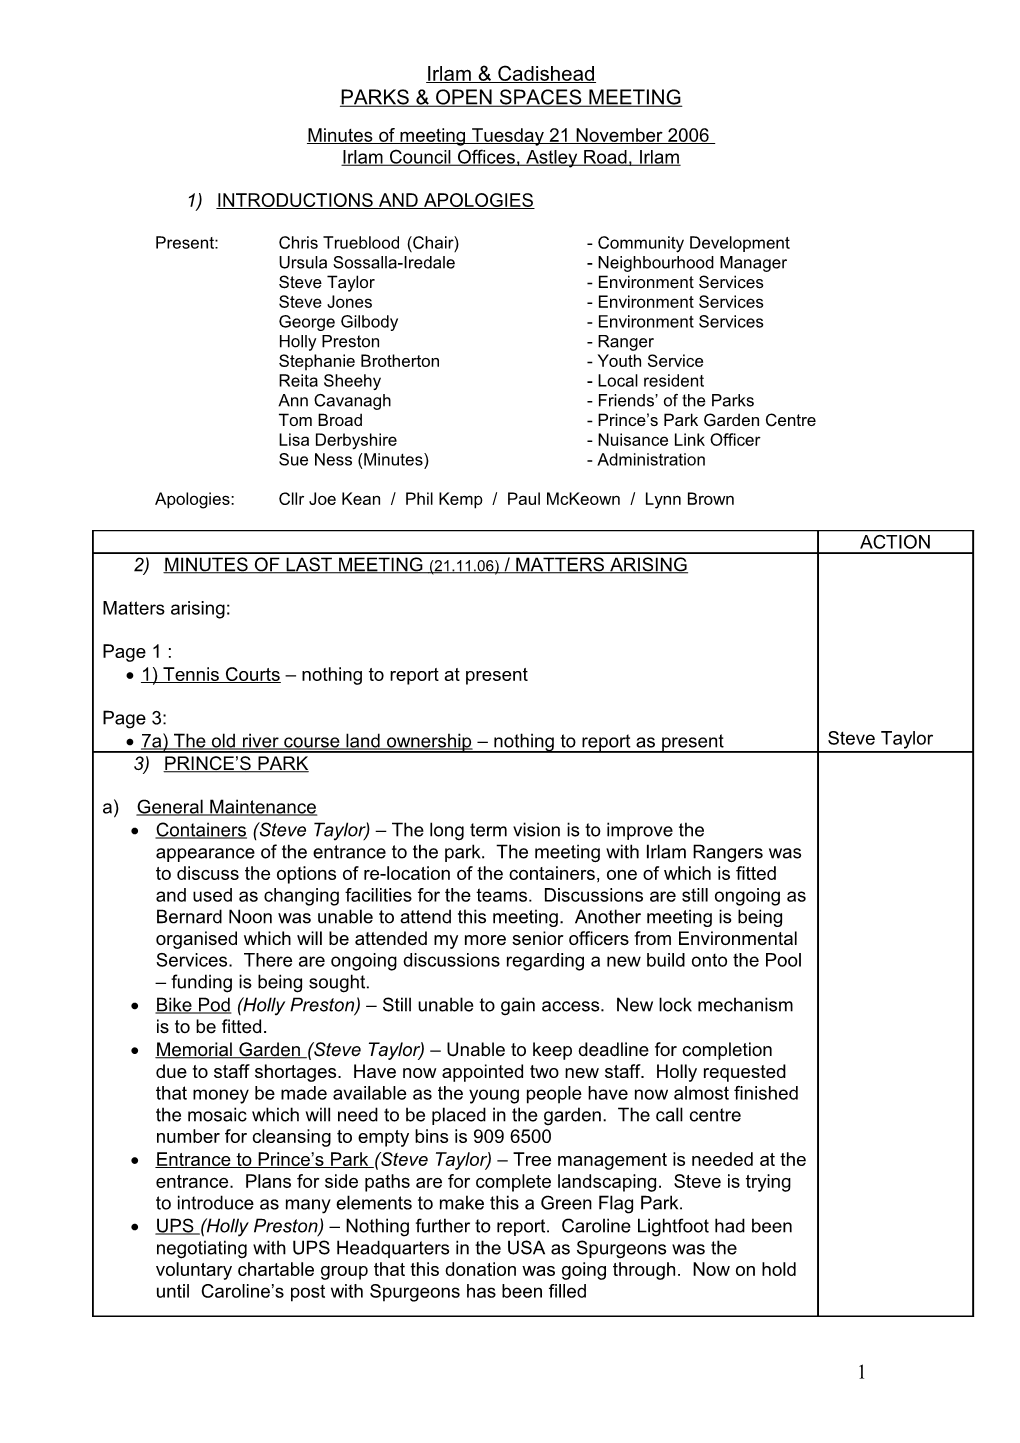 Minutes of Meeting Tuesday 21 November 2006